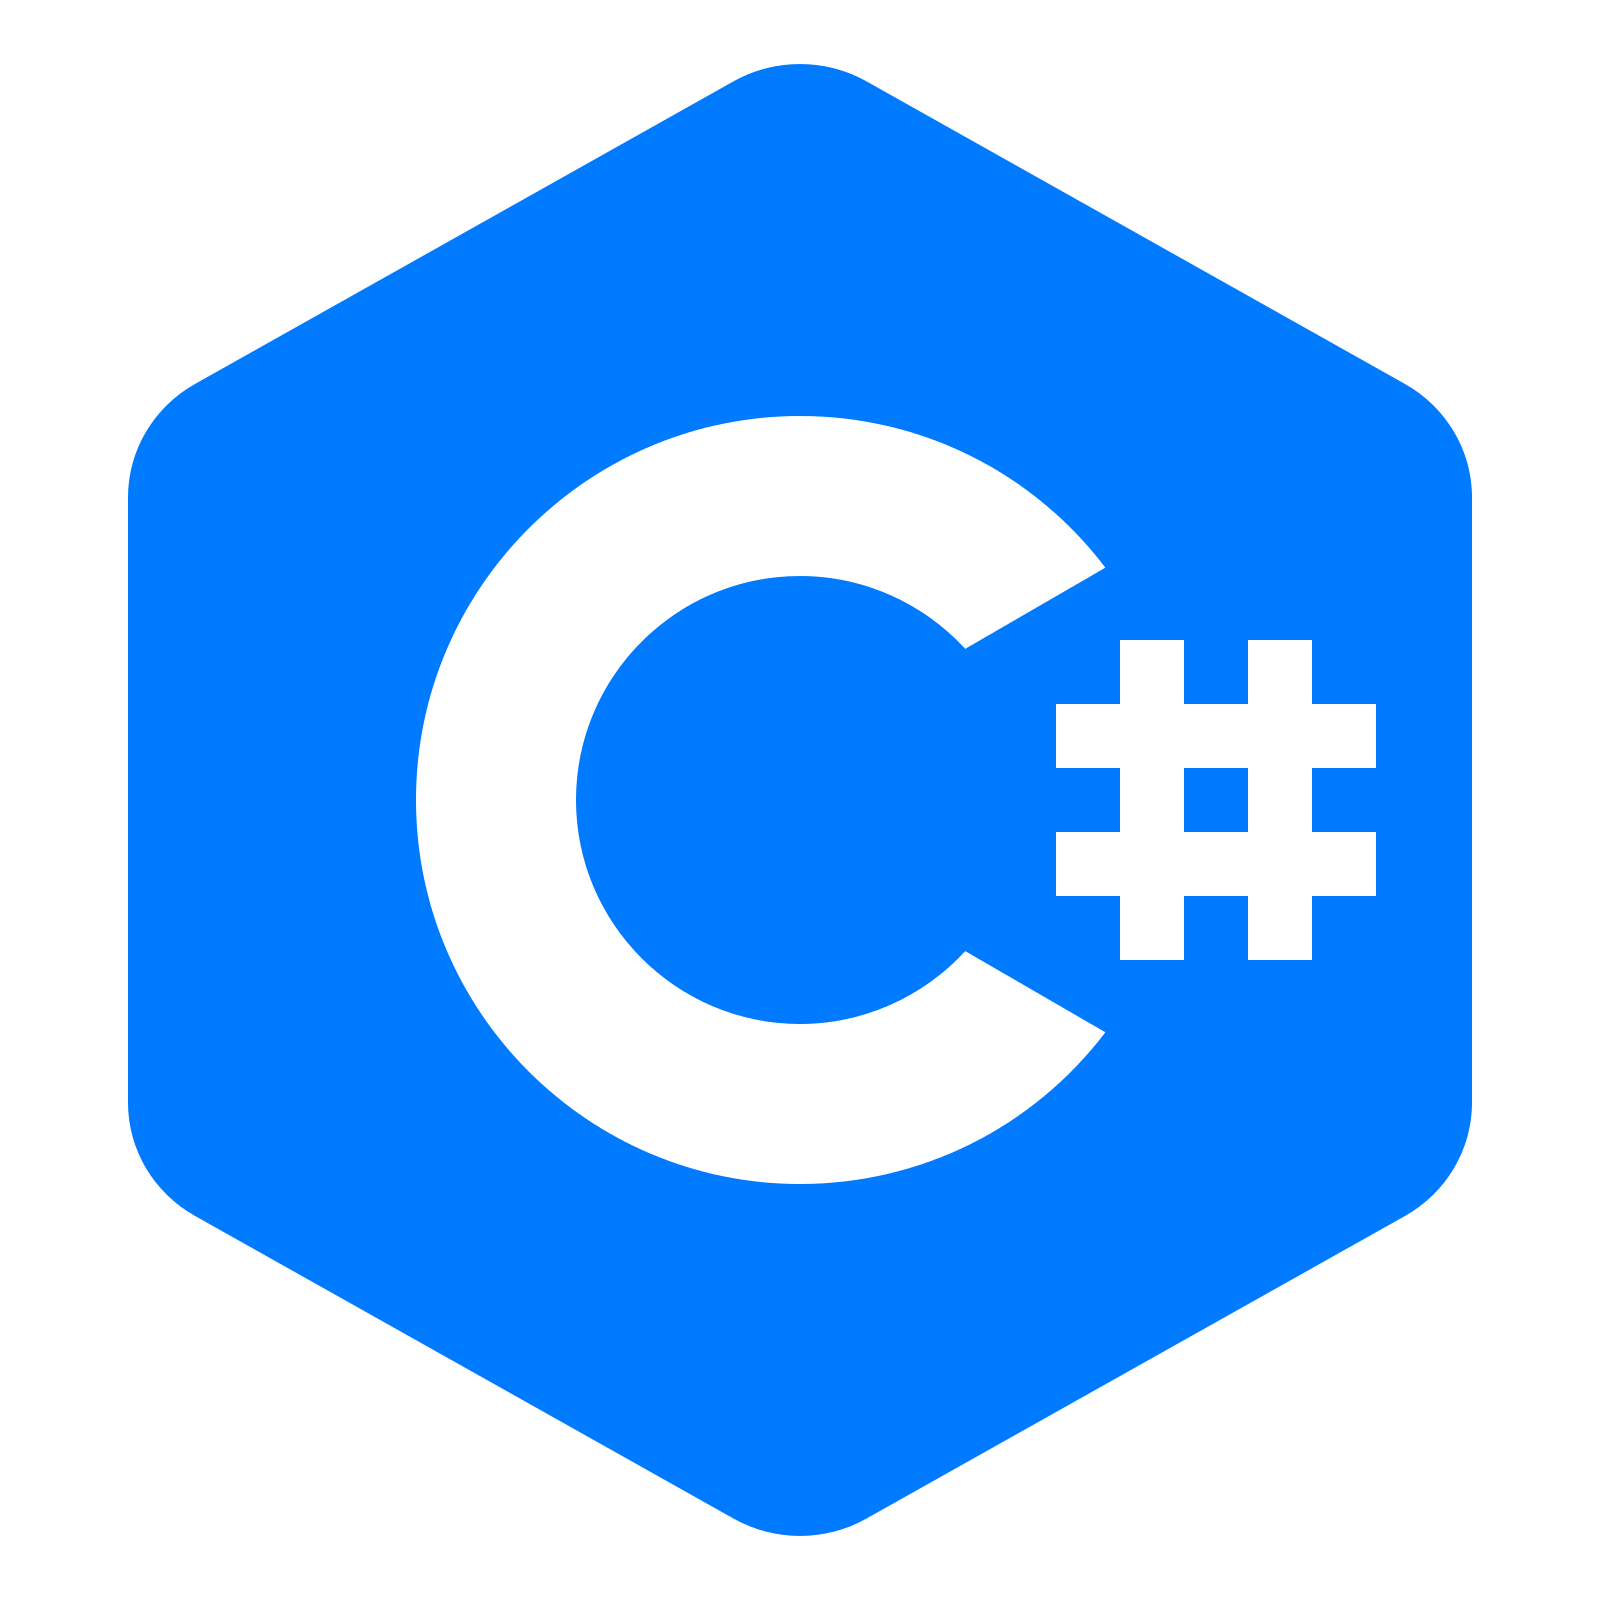 C# Visual Studio Logo - Best C# Programming Books for Beginners and Advanced Developers ...